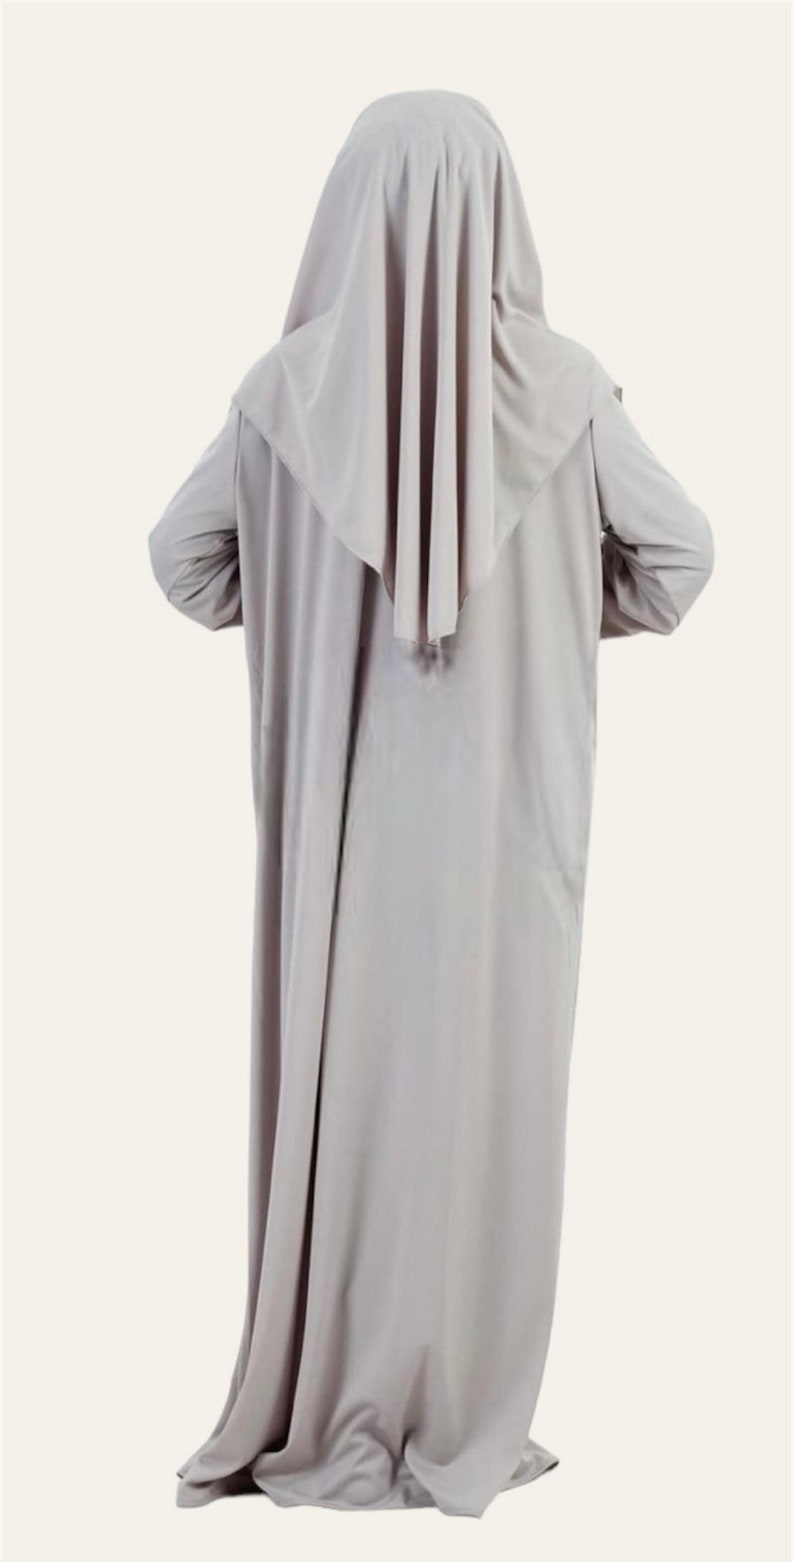 Women's prayer dress image 4